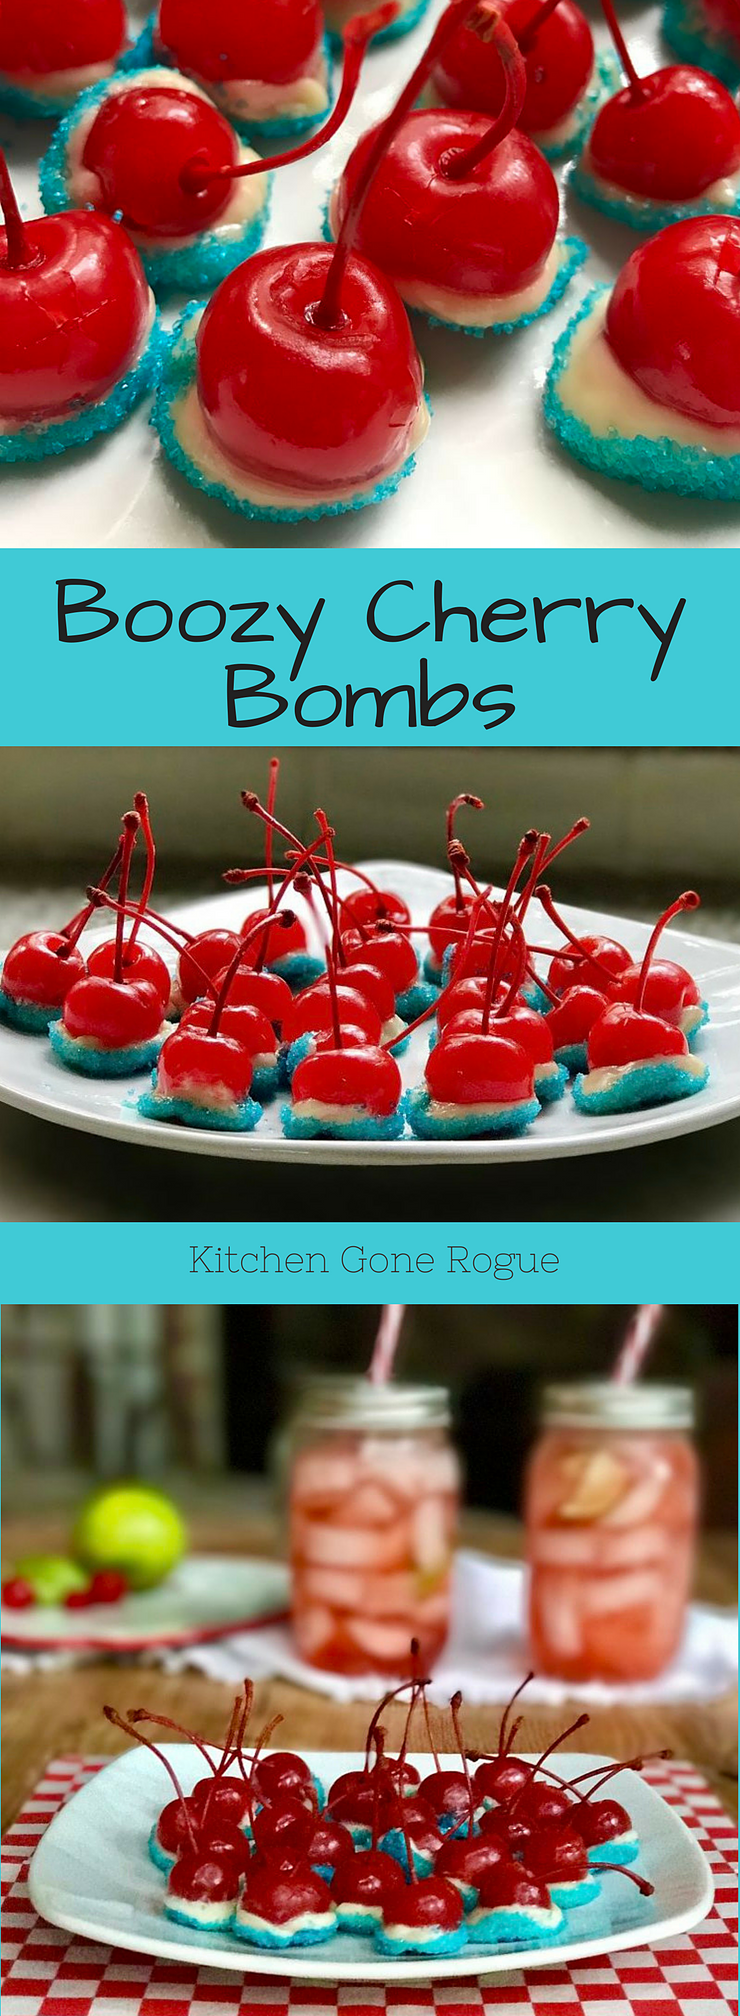 Boozy Cherry Bombs - Kitchen Gone Rogue